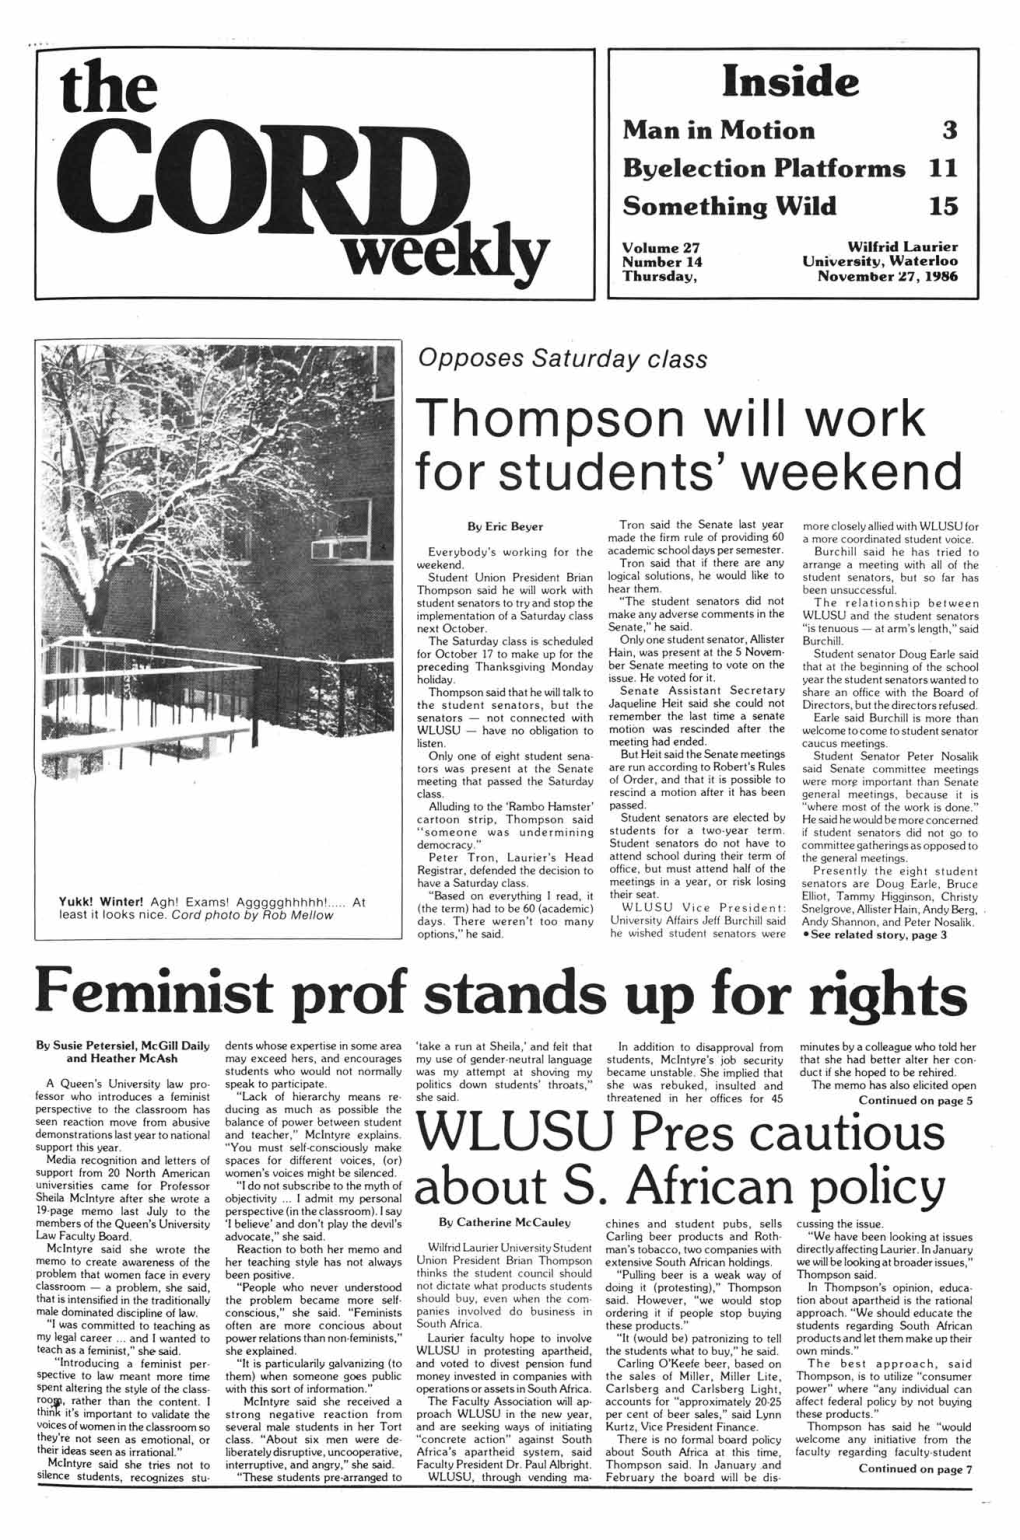 The Cord Weekly (November 27, 1986)